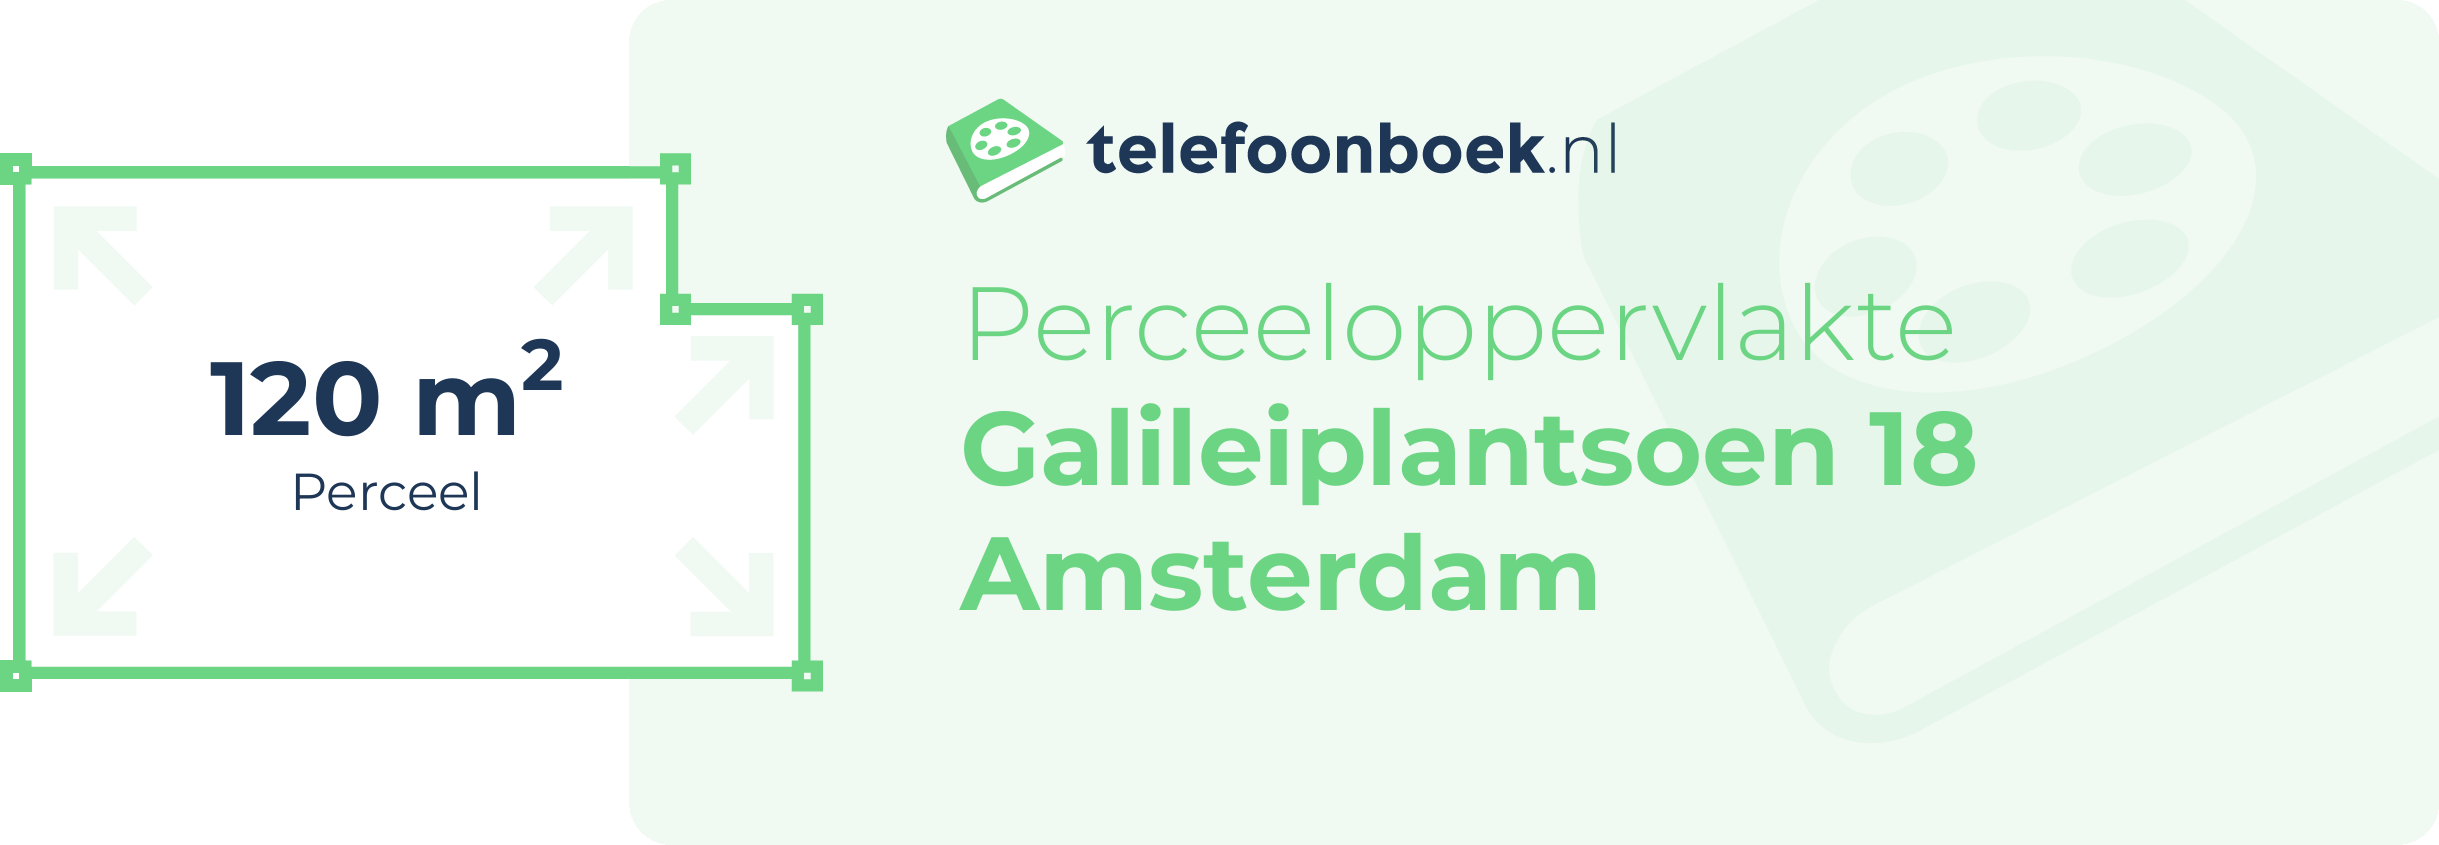 Perceeloppervlakte Galileiplantsoen 18 Amsterdam